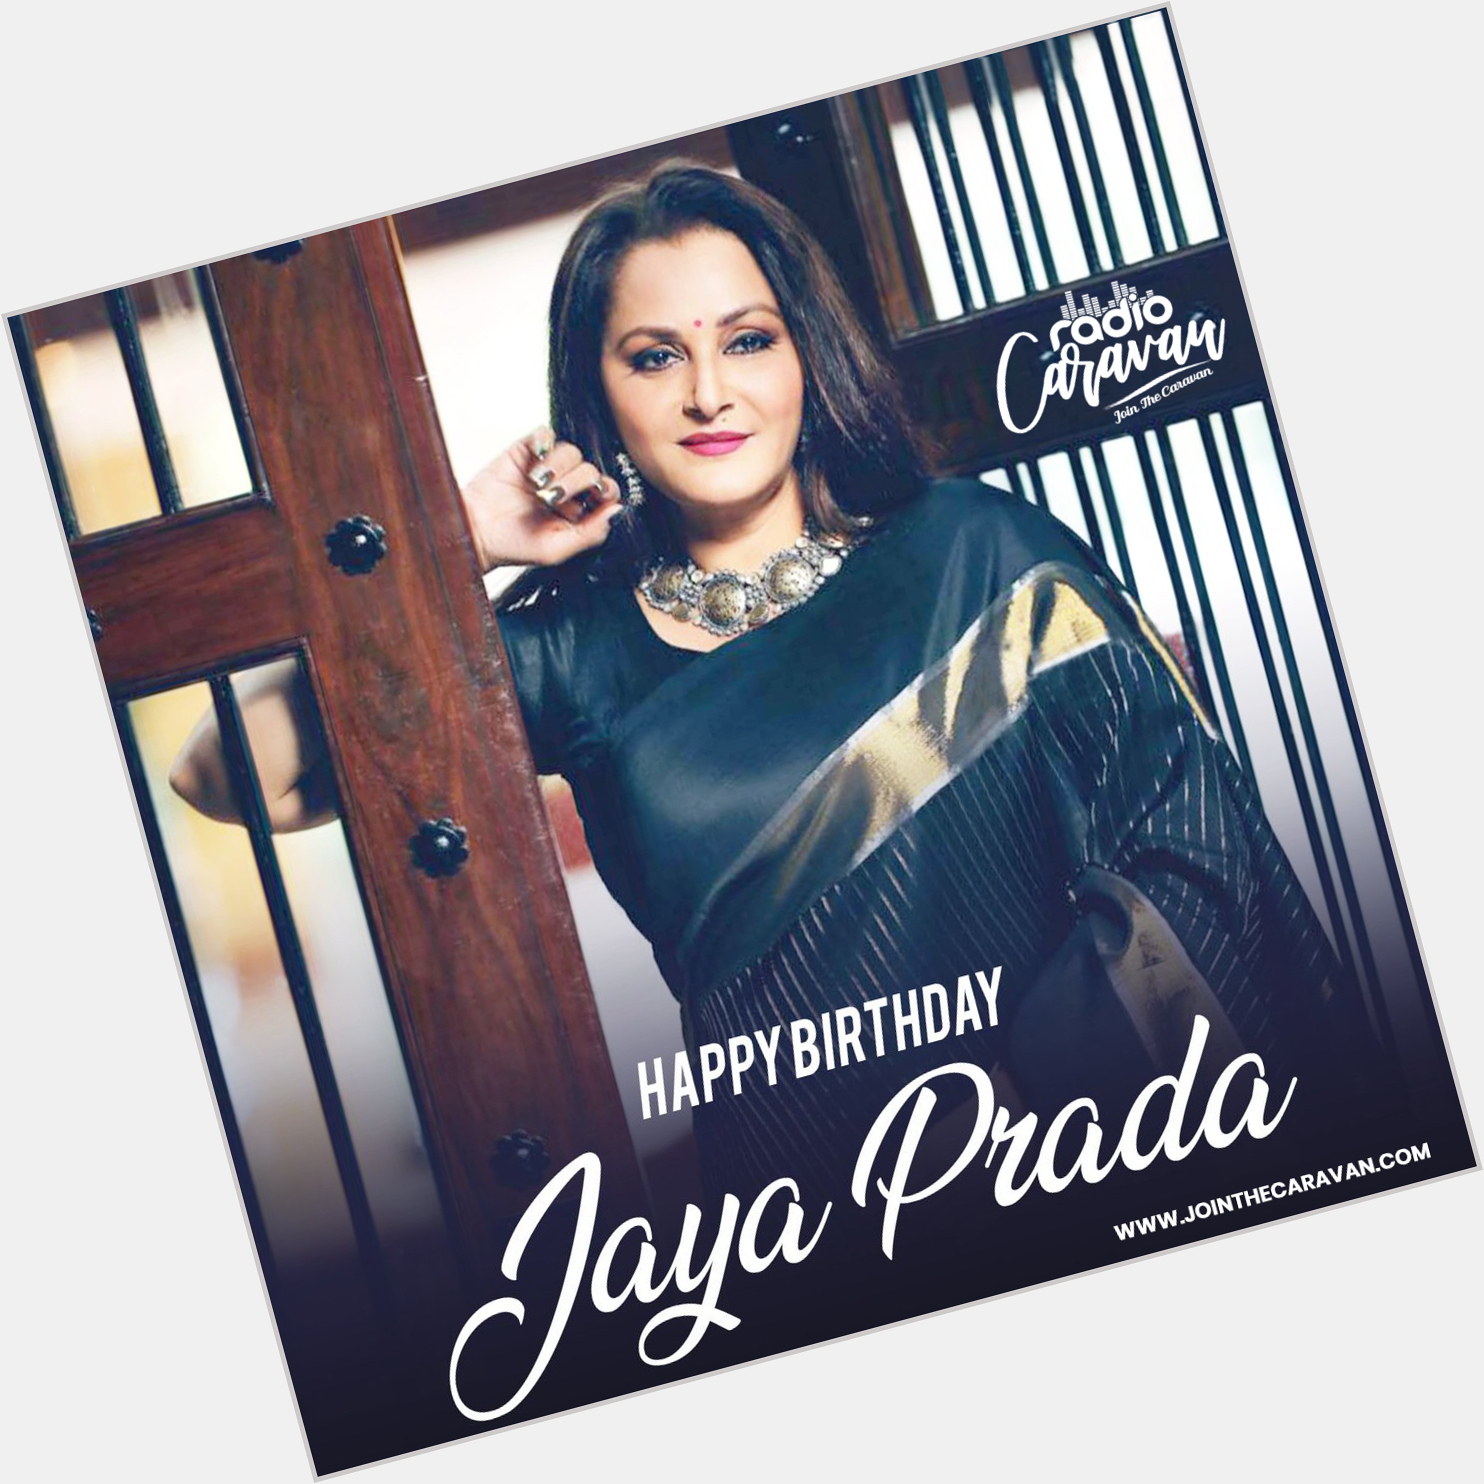 We wish you Happy Birthday Jaya Prada     